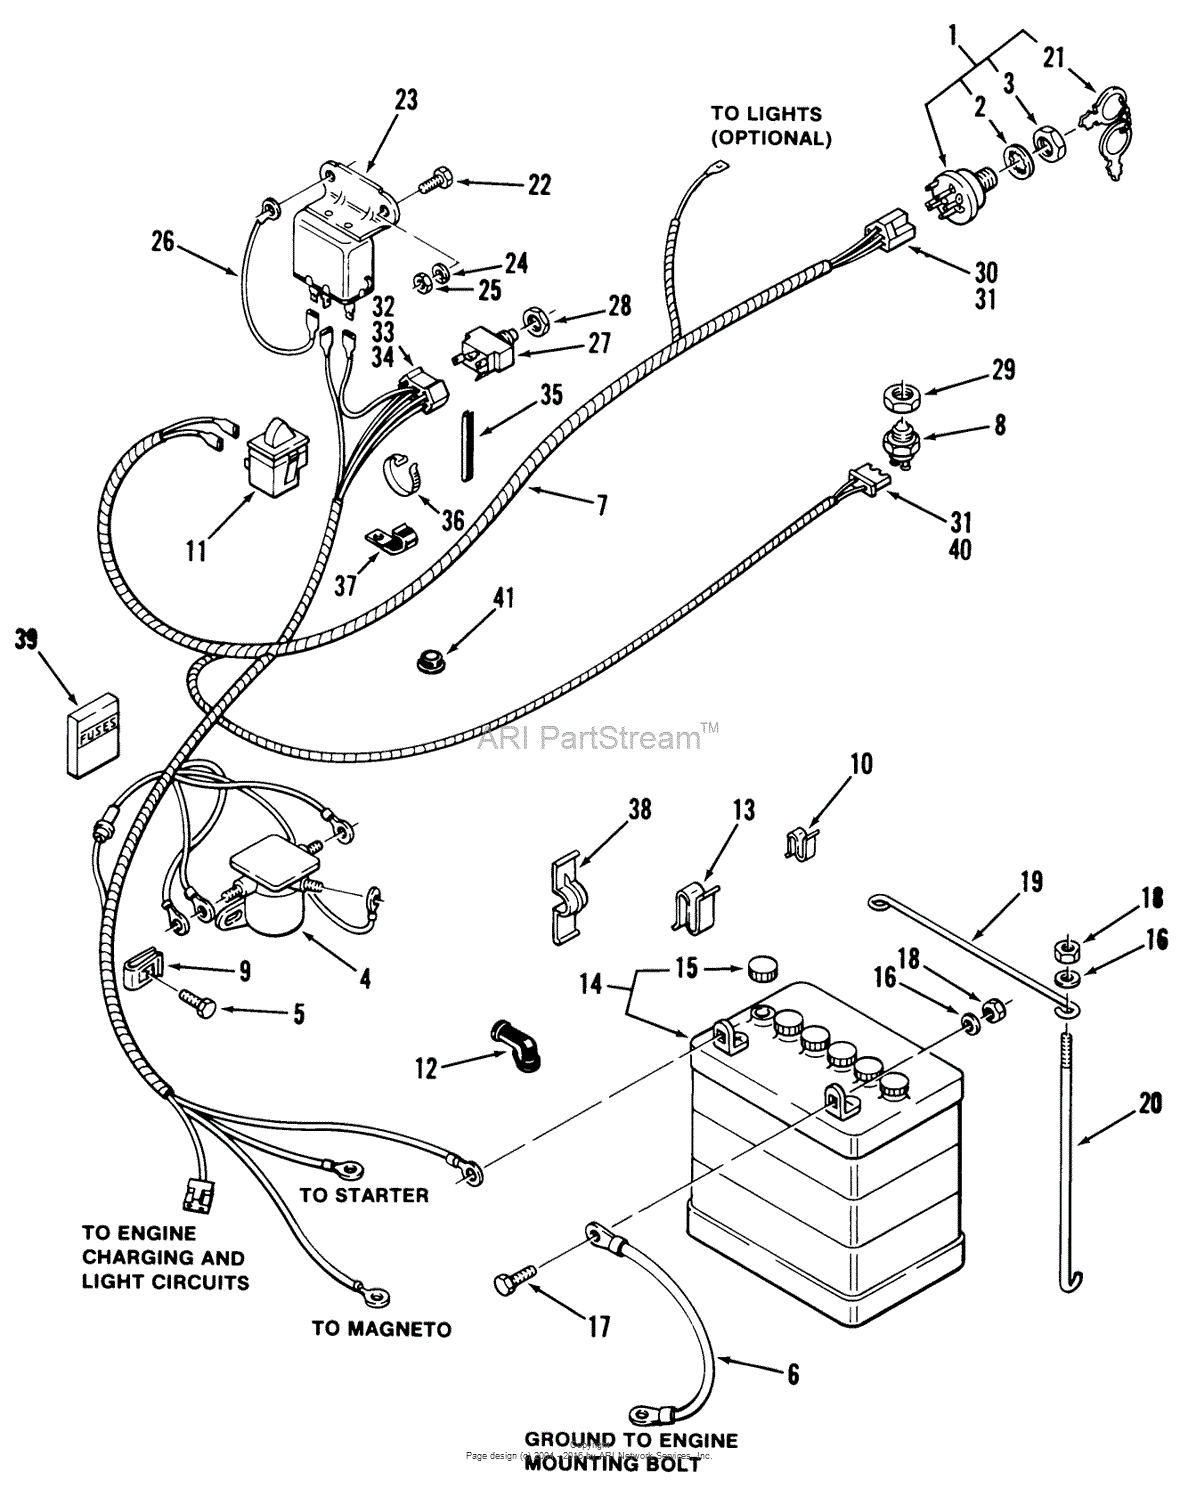 Toro Interlock System Wiring Diagram Electrical On Pinterest Wiring